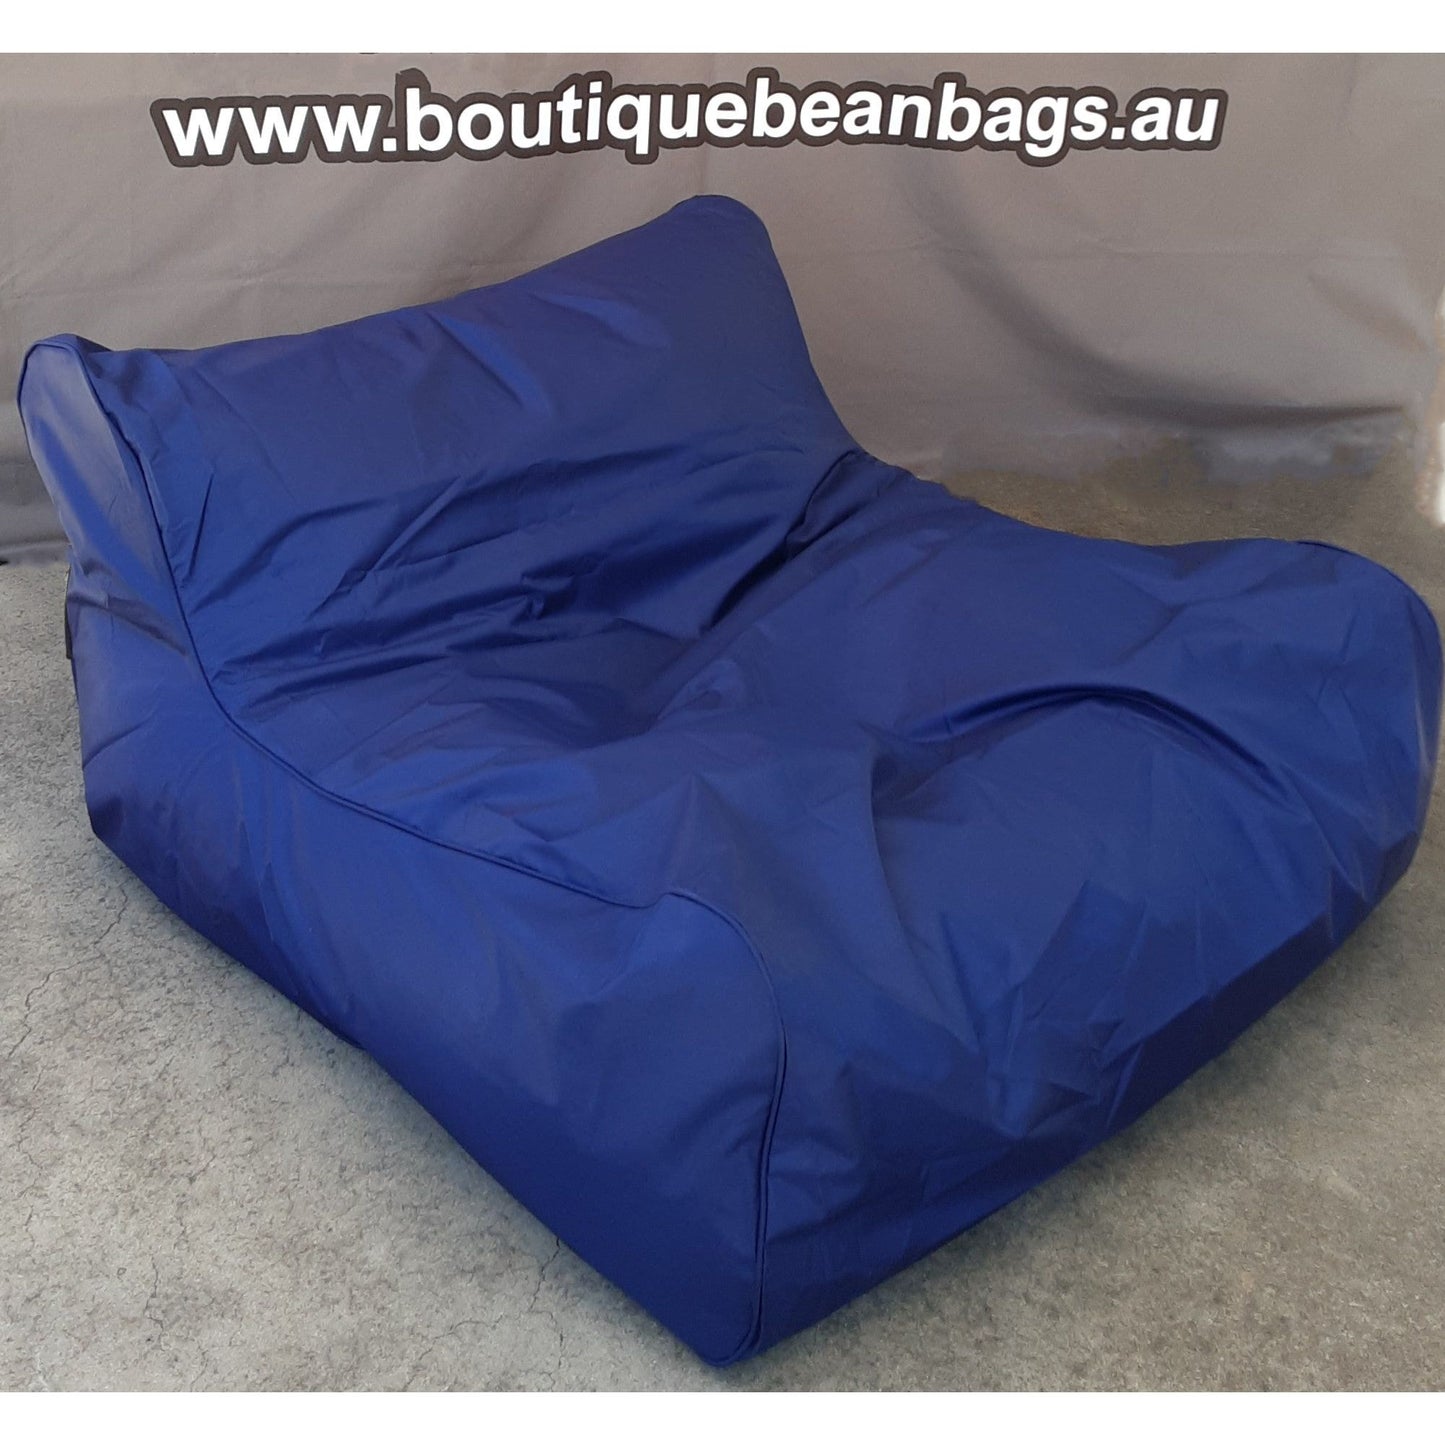 Outdoor Waterproof Bean Bag Colossus - Navy Blue